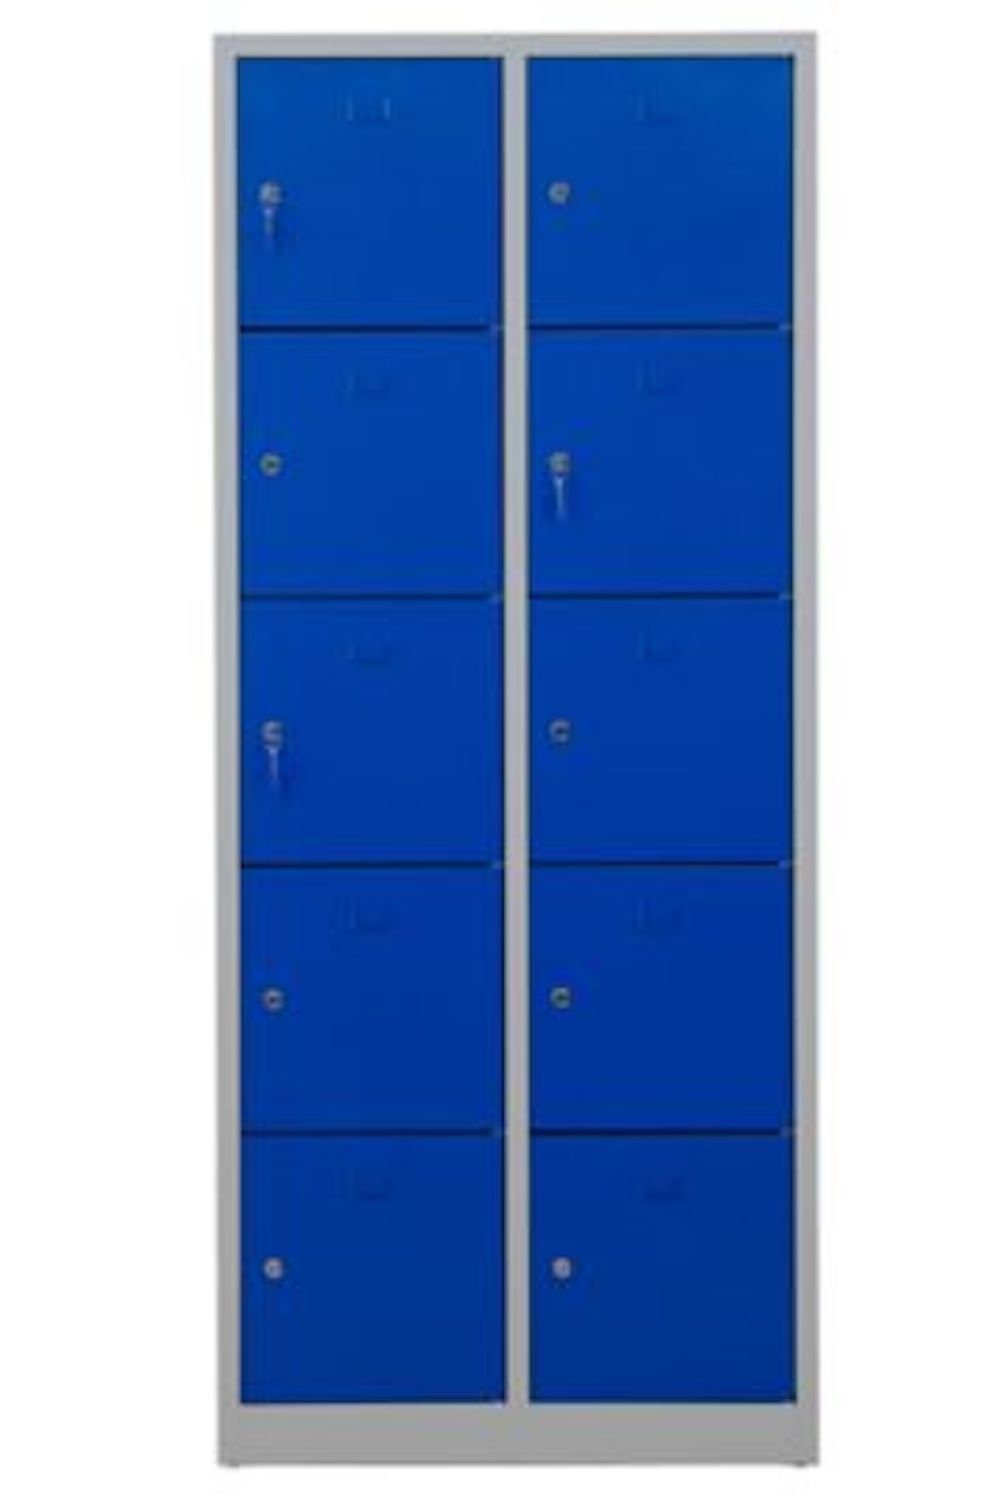 HxBxT Falcon, Spind Grau-Blau 190x80x45cm, Medium, PROREGAL® Schließfachschrank